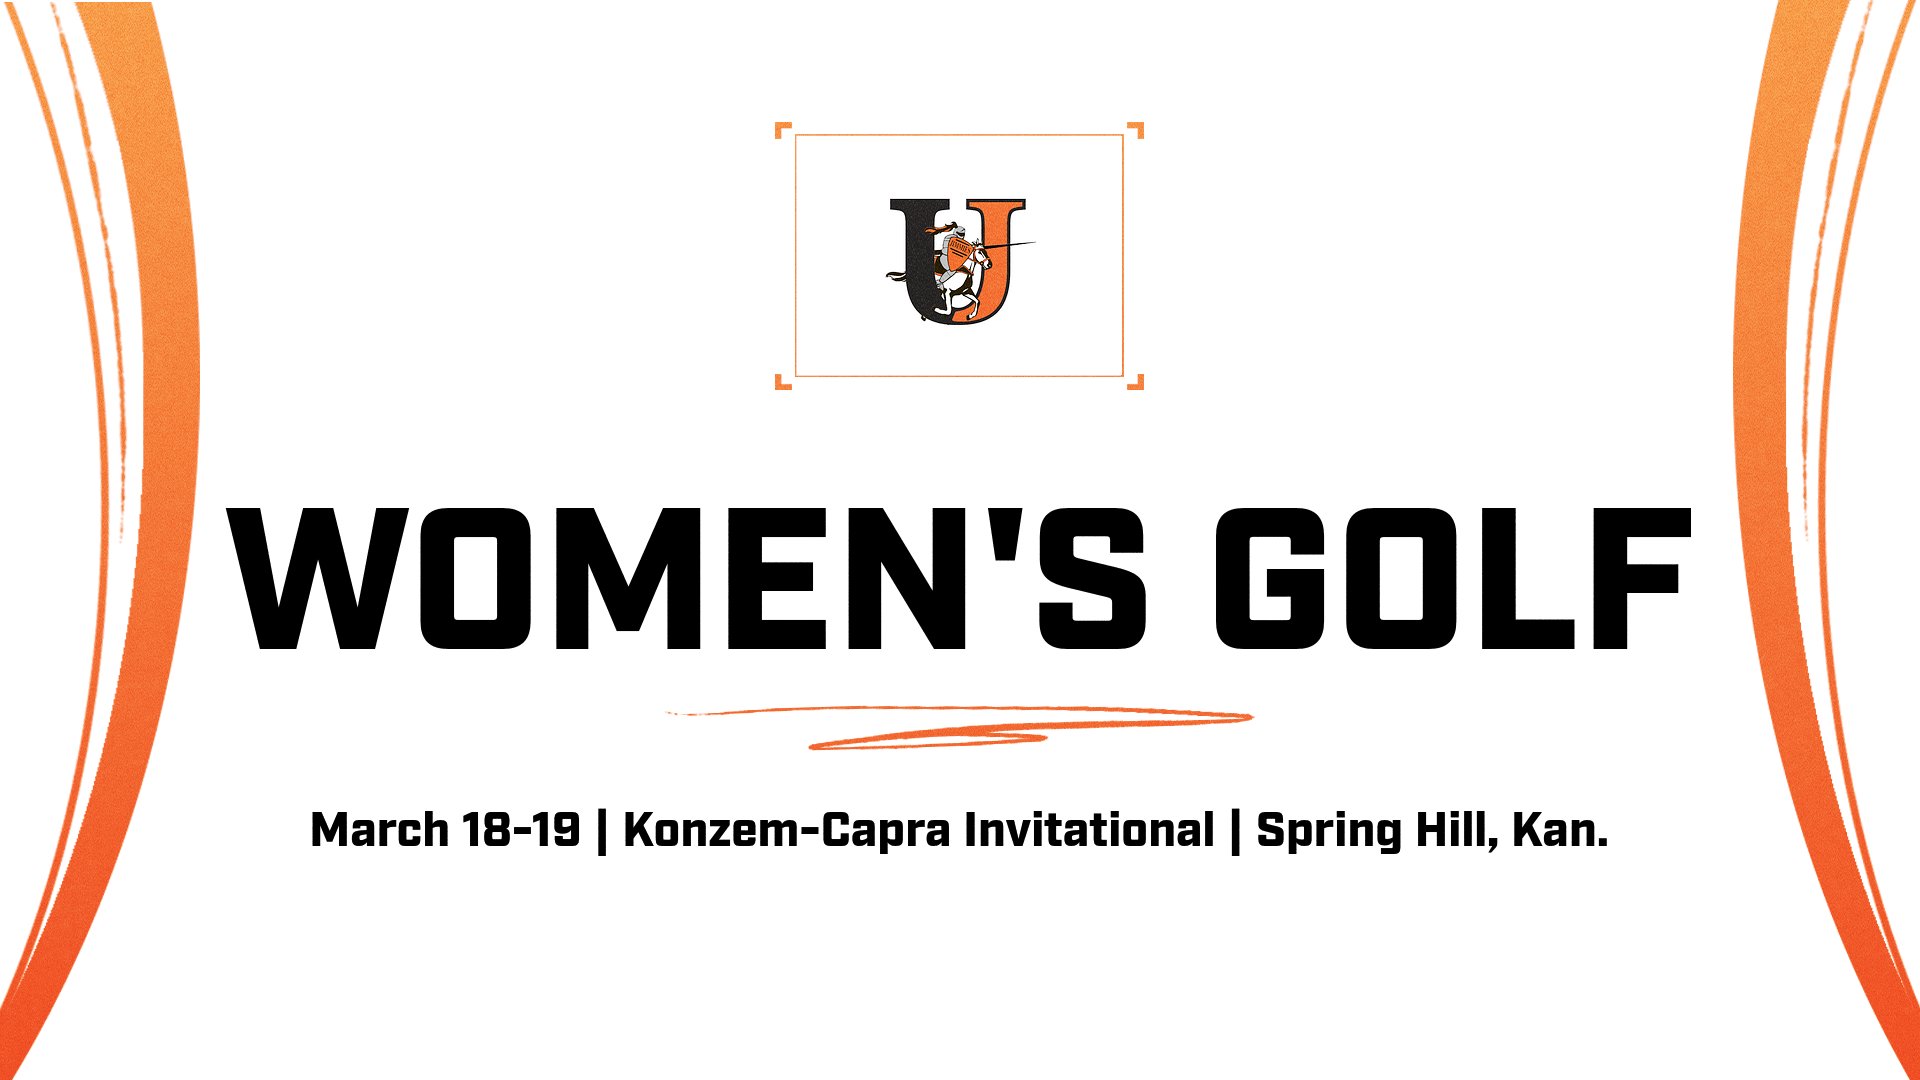 Jimmie women's golf swings back into play at Konzem-Capra Invitational